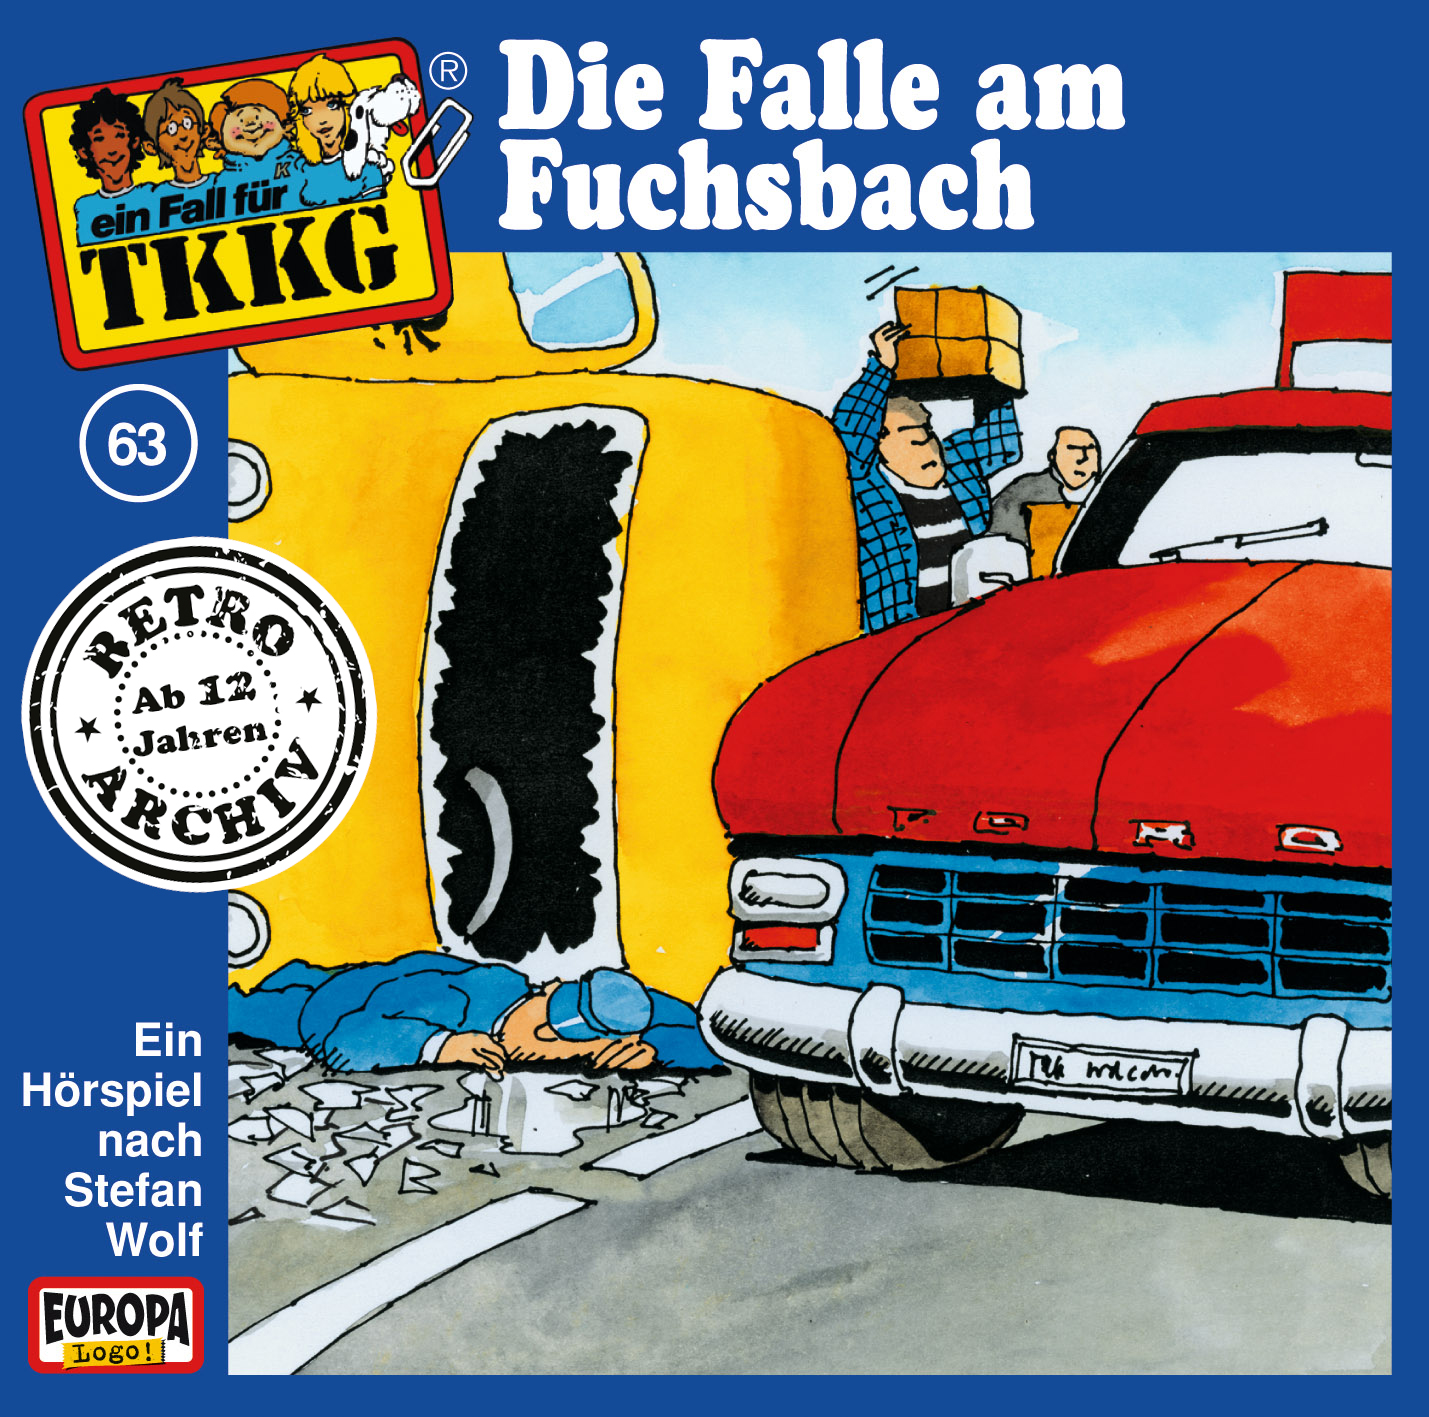 TKKG Retro-Archiv: Die Falle am Fuchsbach